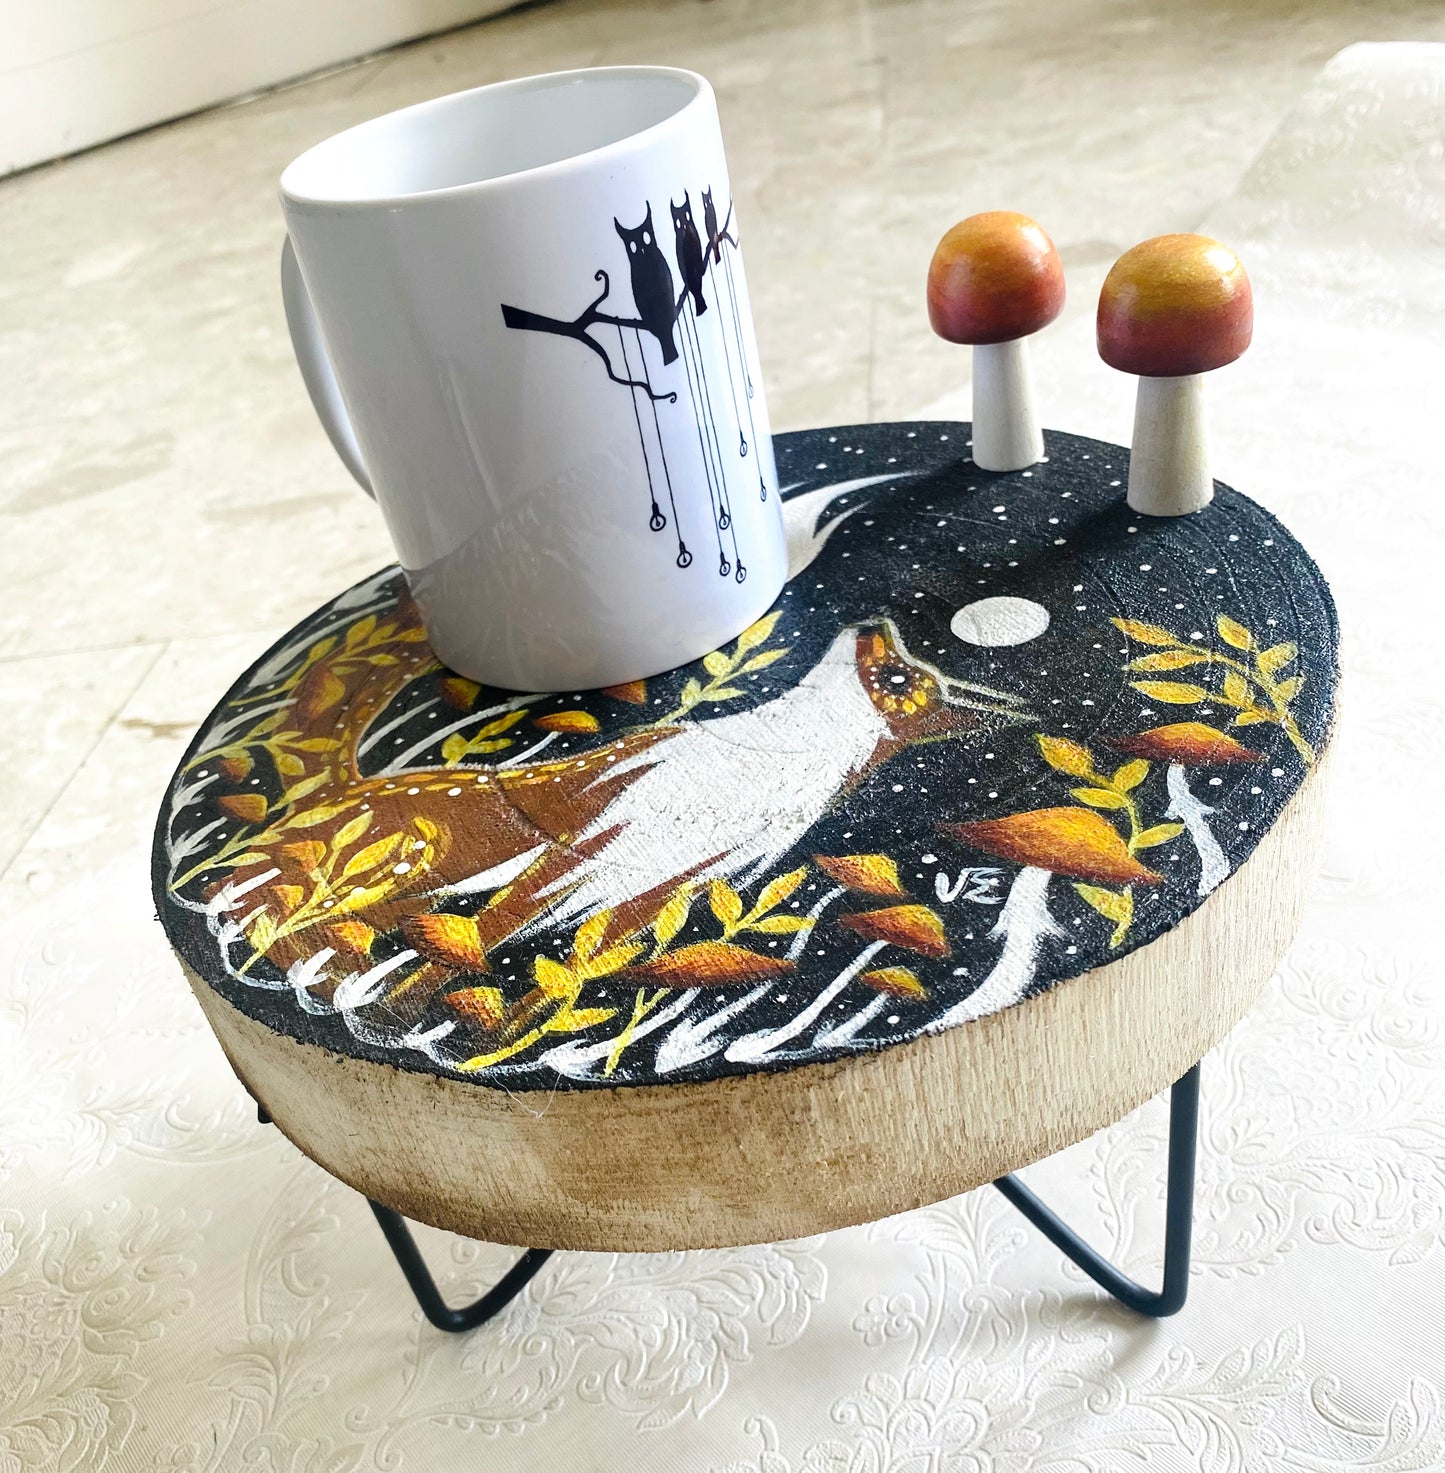 Miniature table/stand / Mini fakorong asztalka